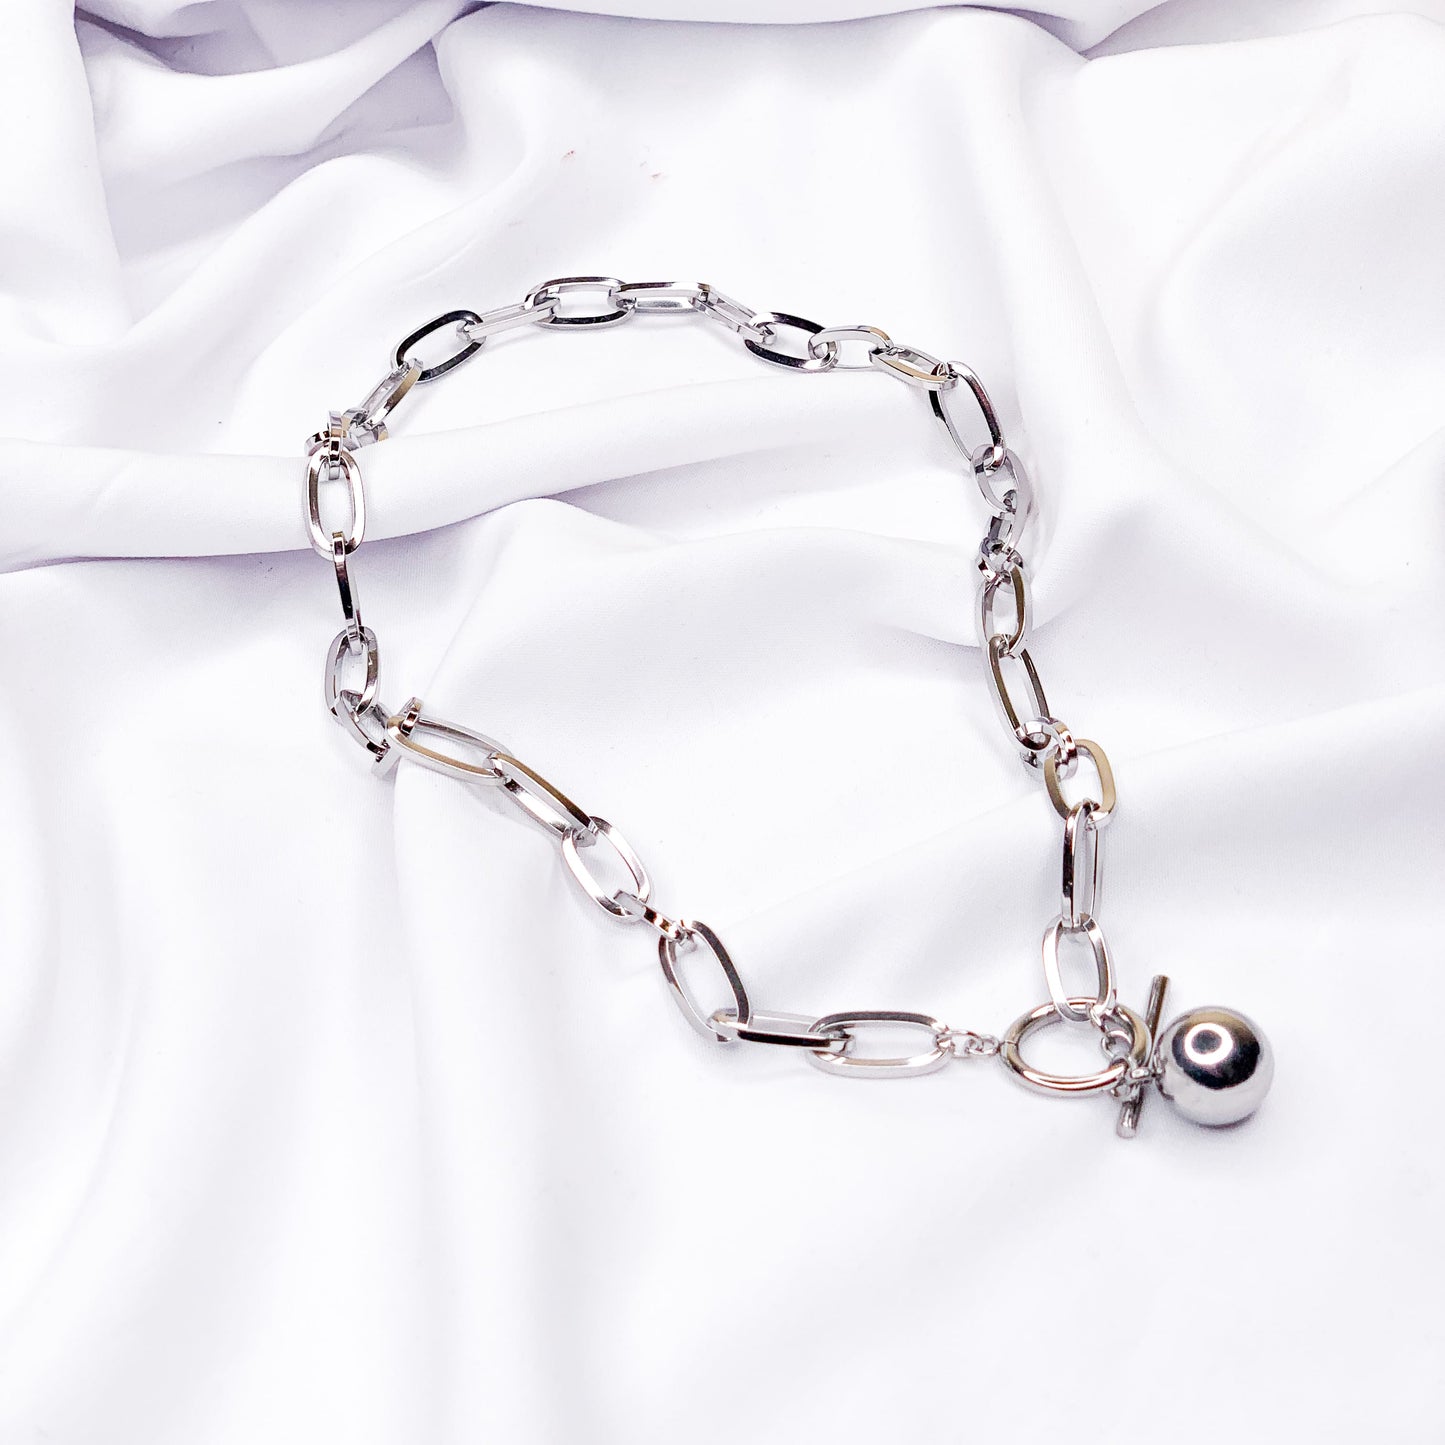 Hellen.V - Silver Chain Necklace | Ball Pendant | Chain Necklaces